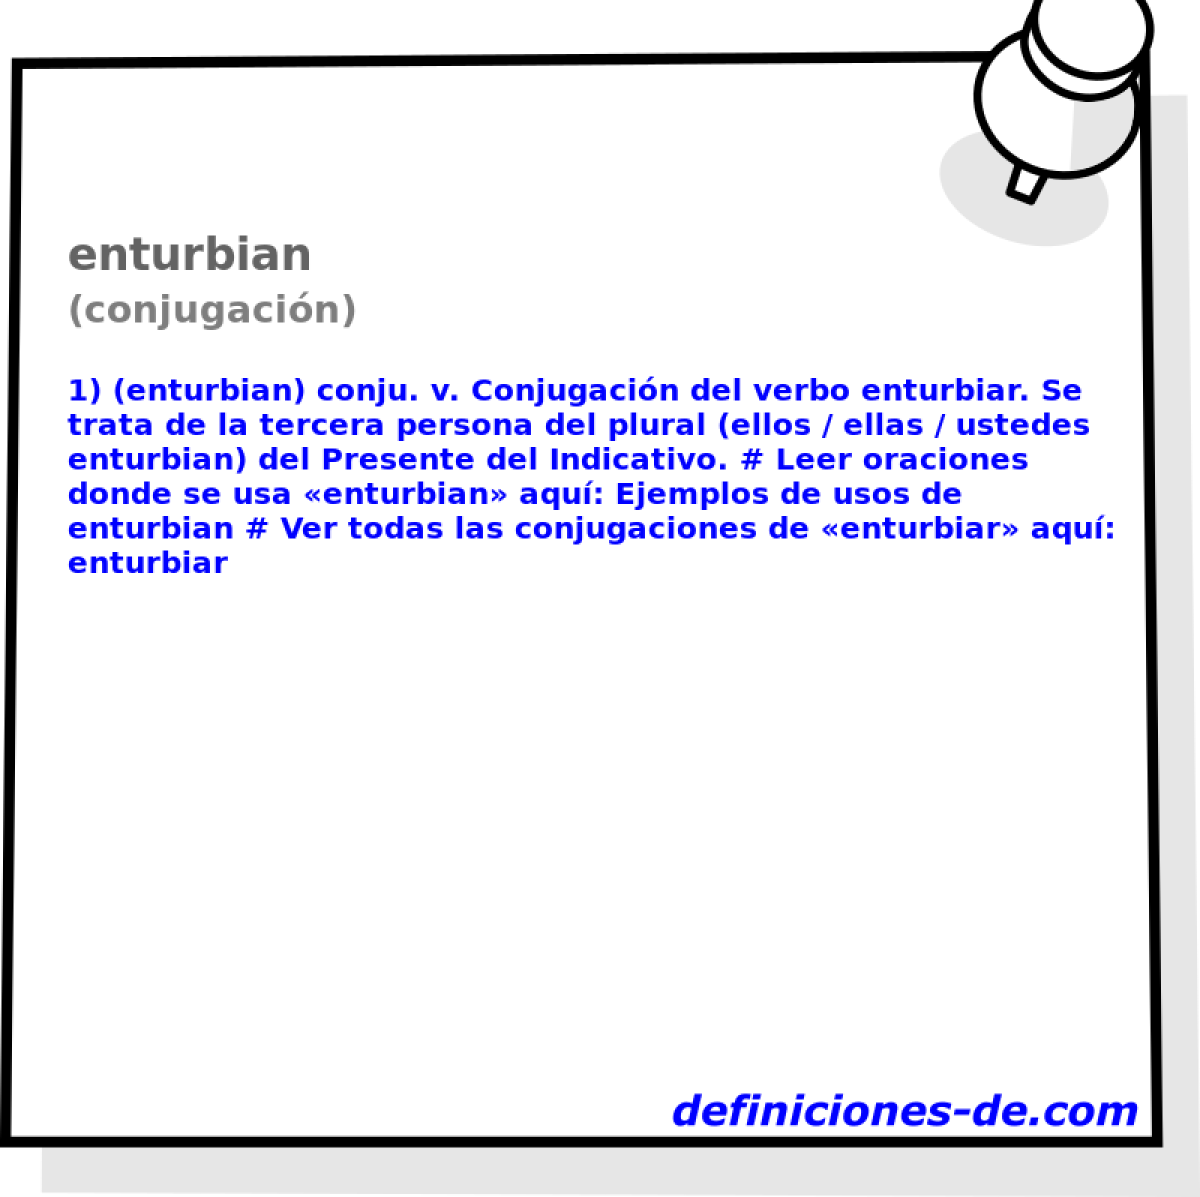 enturbian (conjugacin)